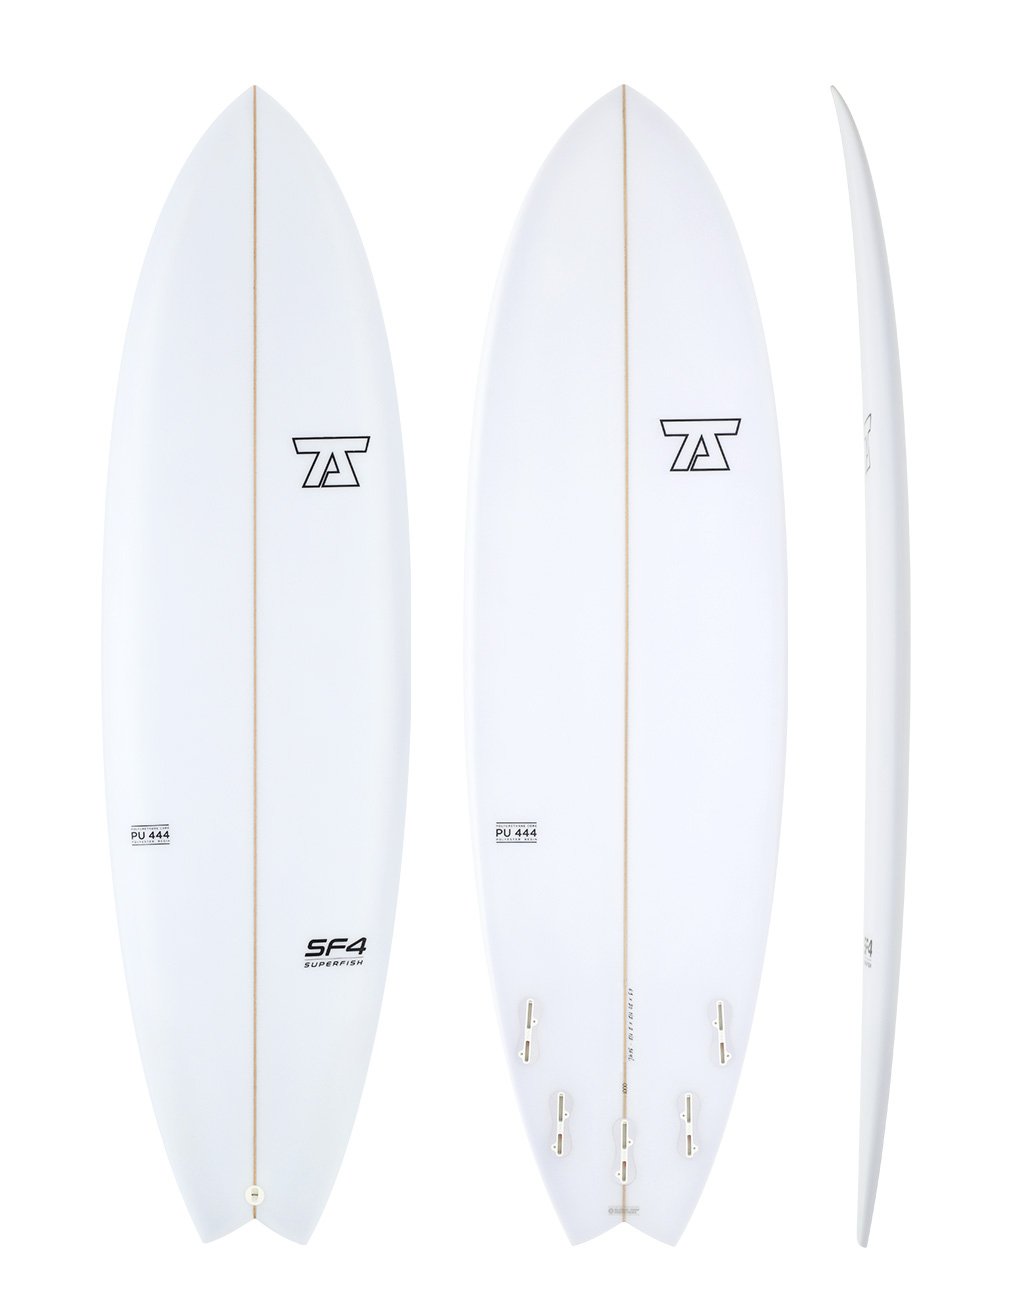 7S Superfish 4 - white surfboard